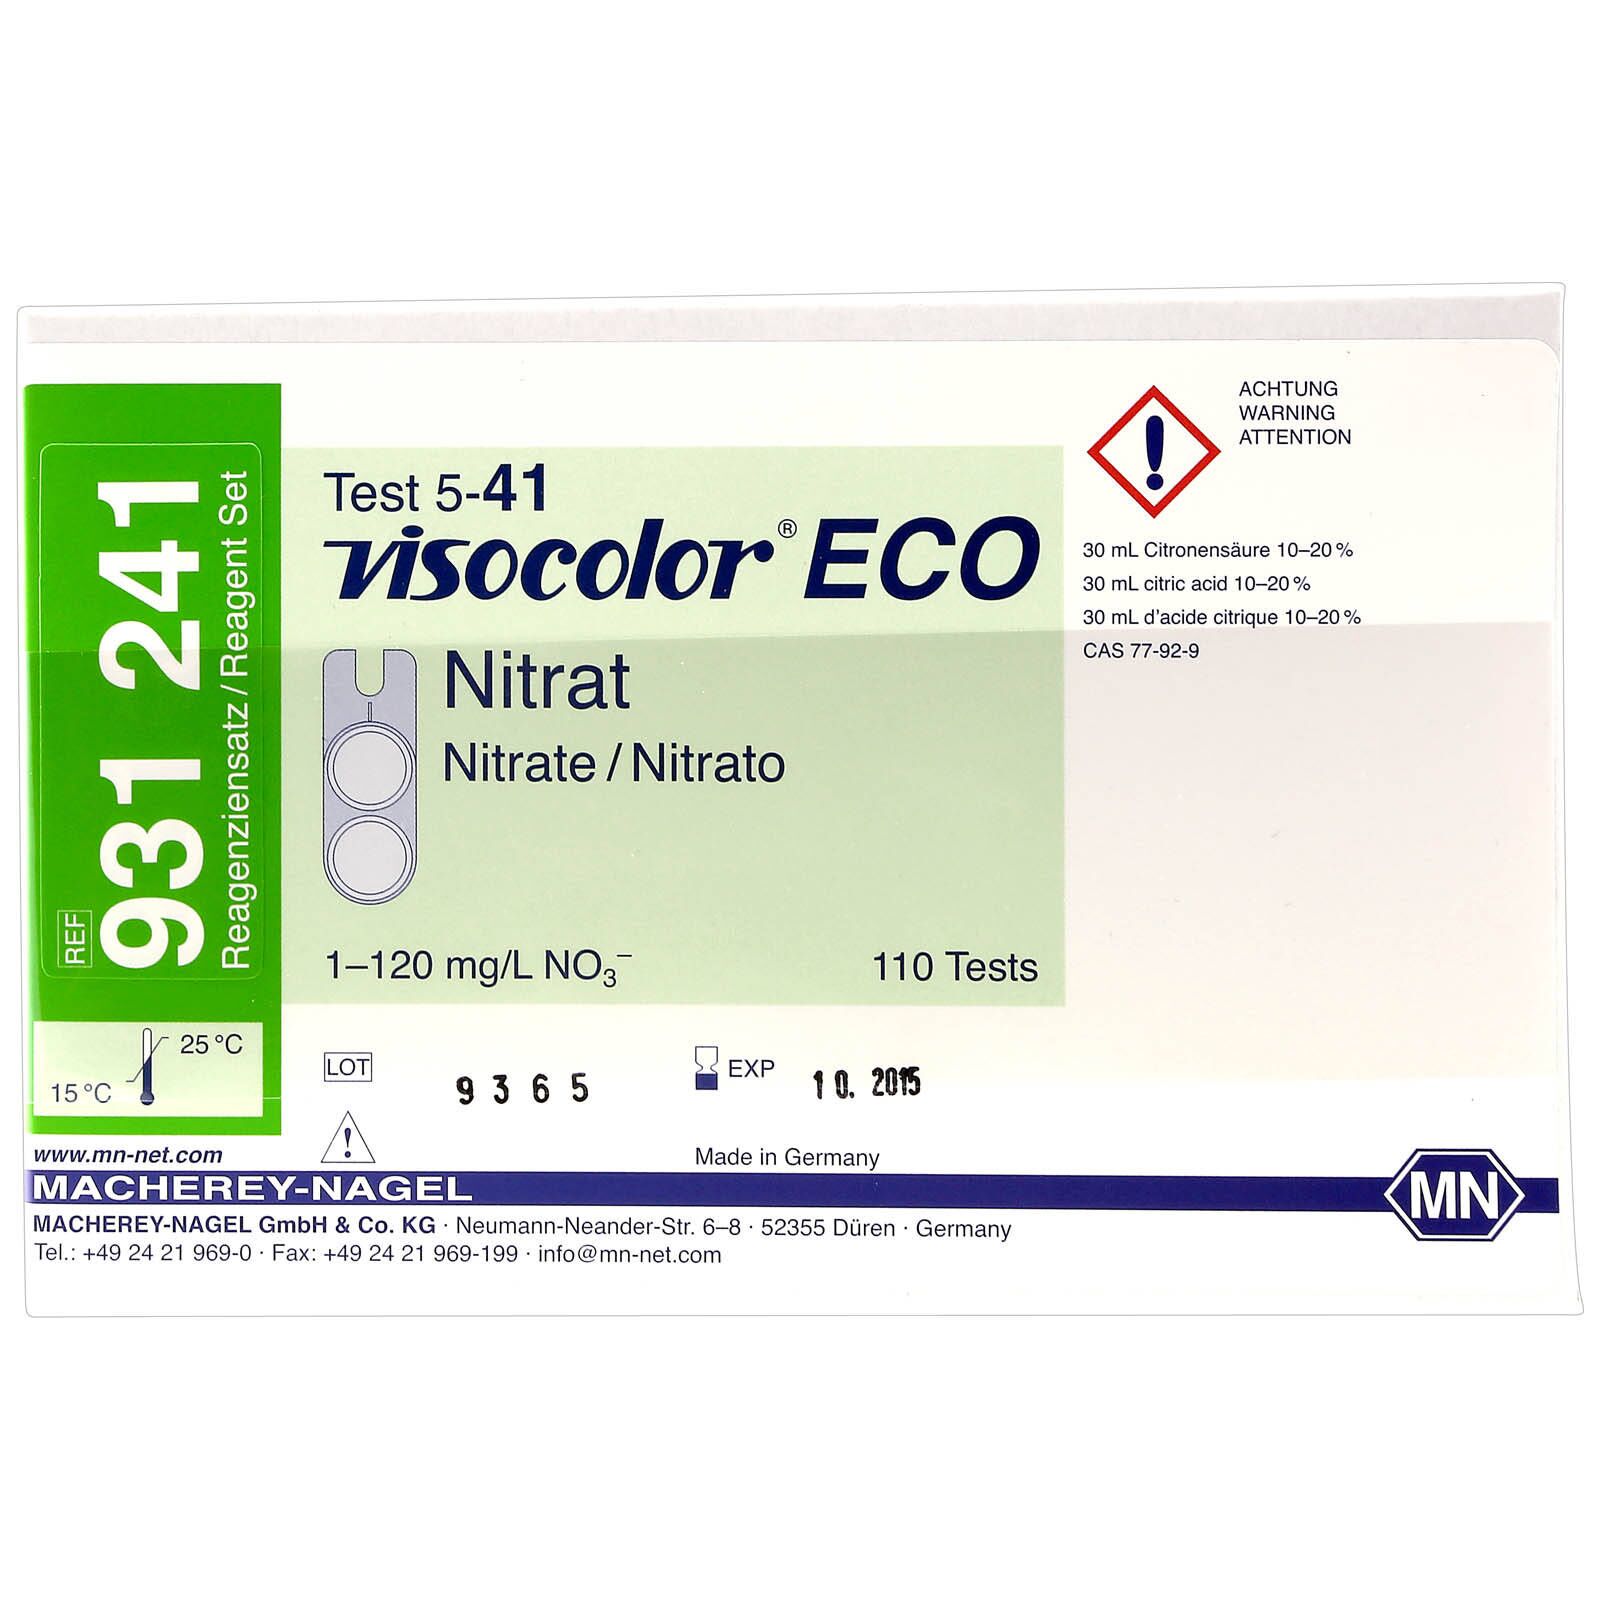 Macherey-Nagel - Visocolor ECO - Nitrat - Test